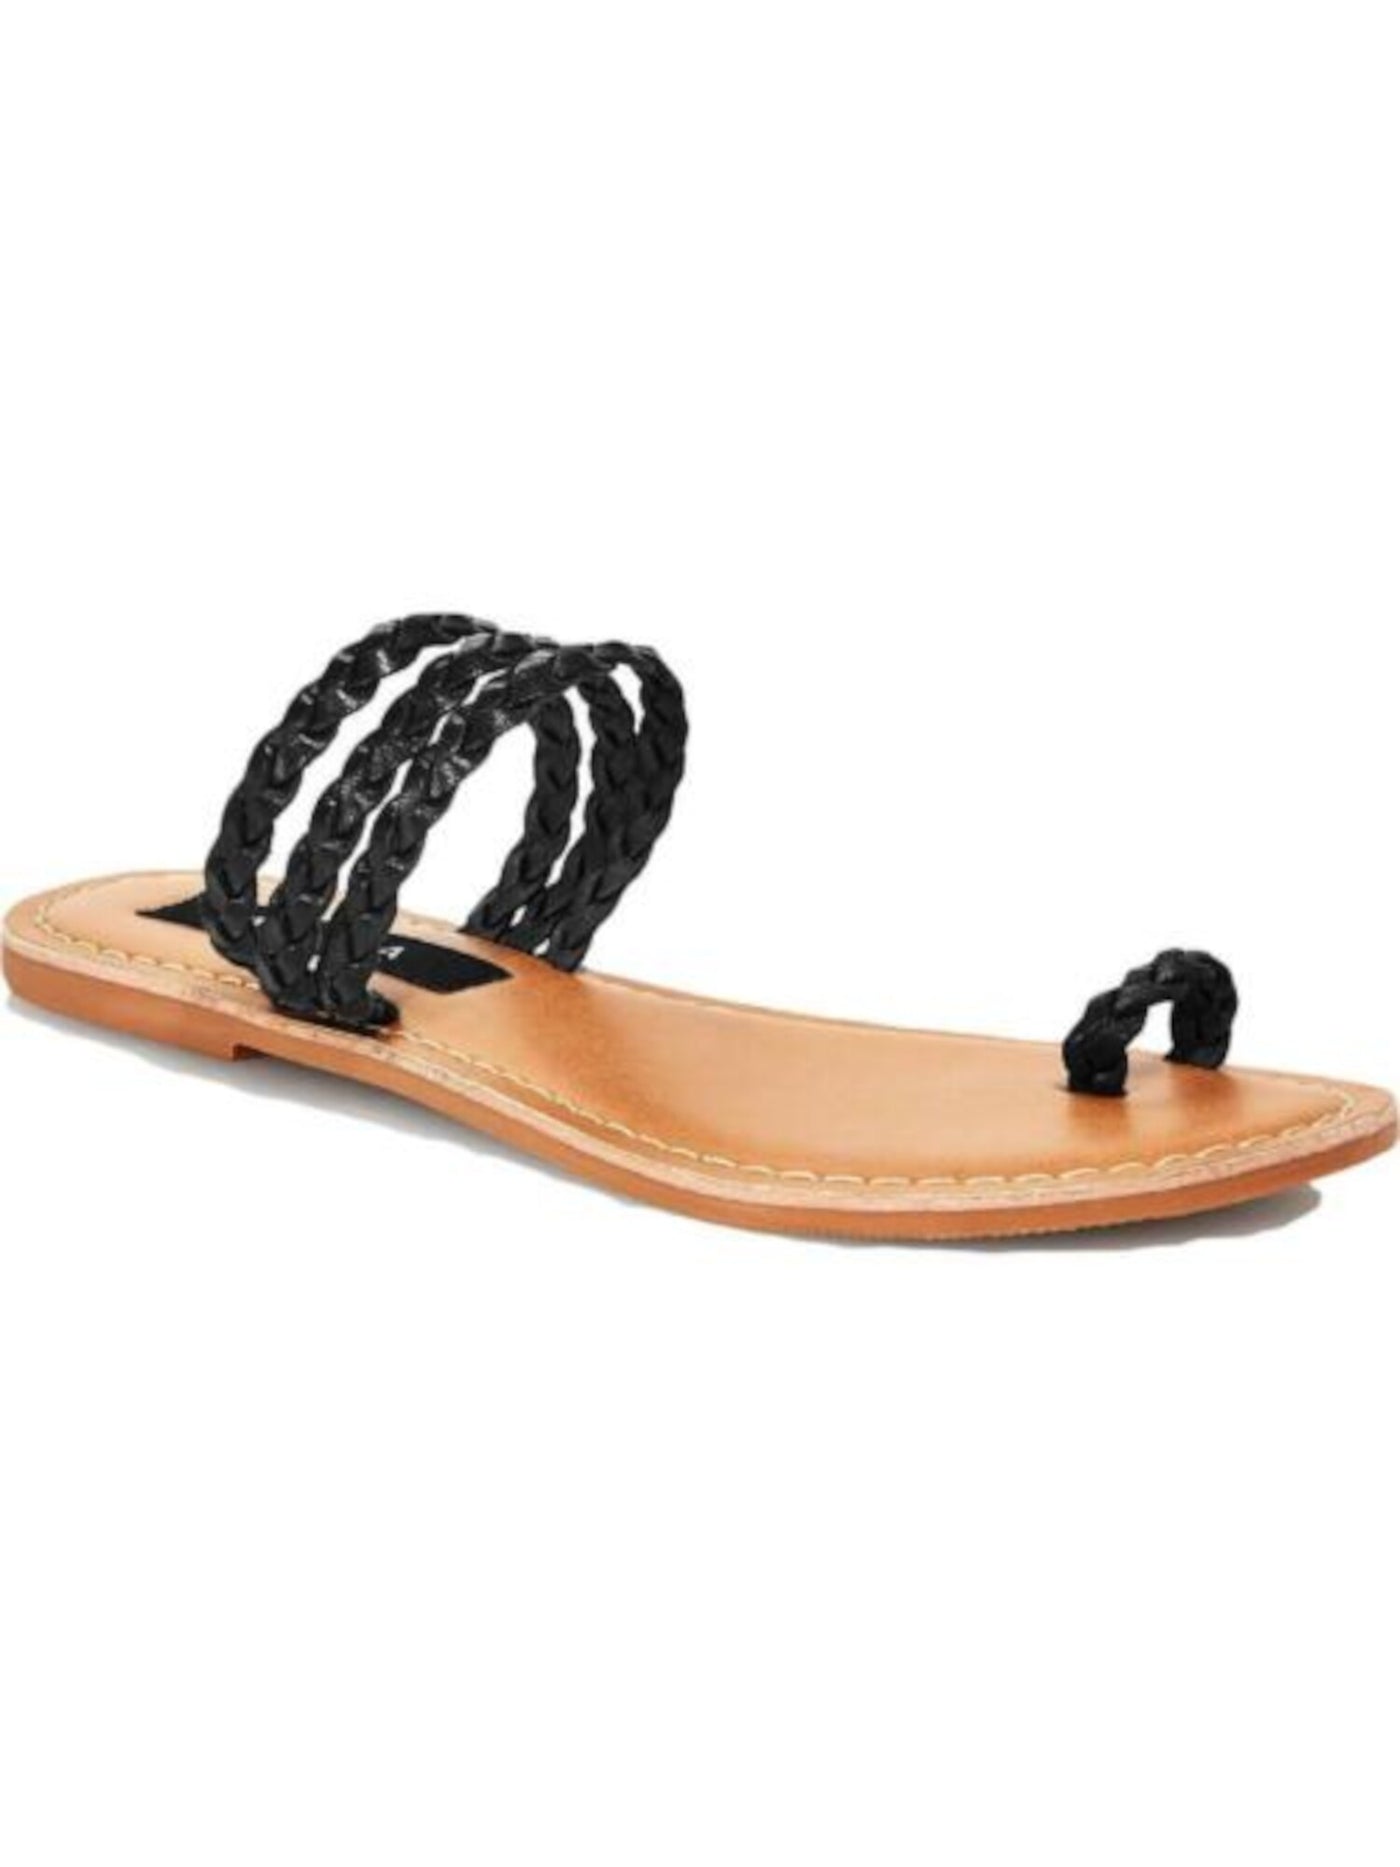 AQUA Womens Black Toe-Loop Cushioned Braided Slay Open Toe Slip On Leather Slide Sandals Shoes 7